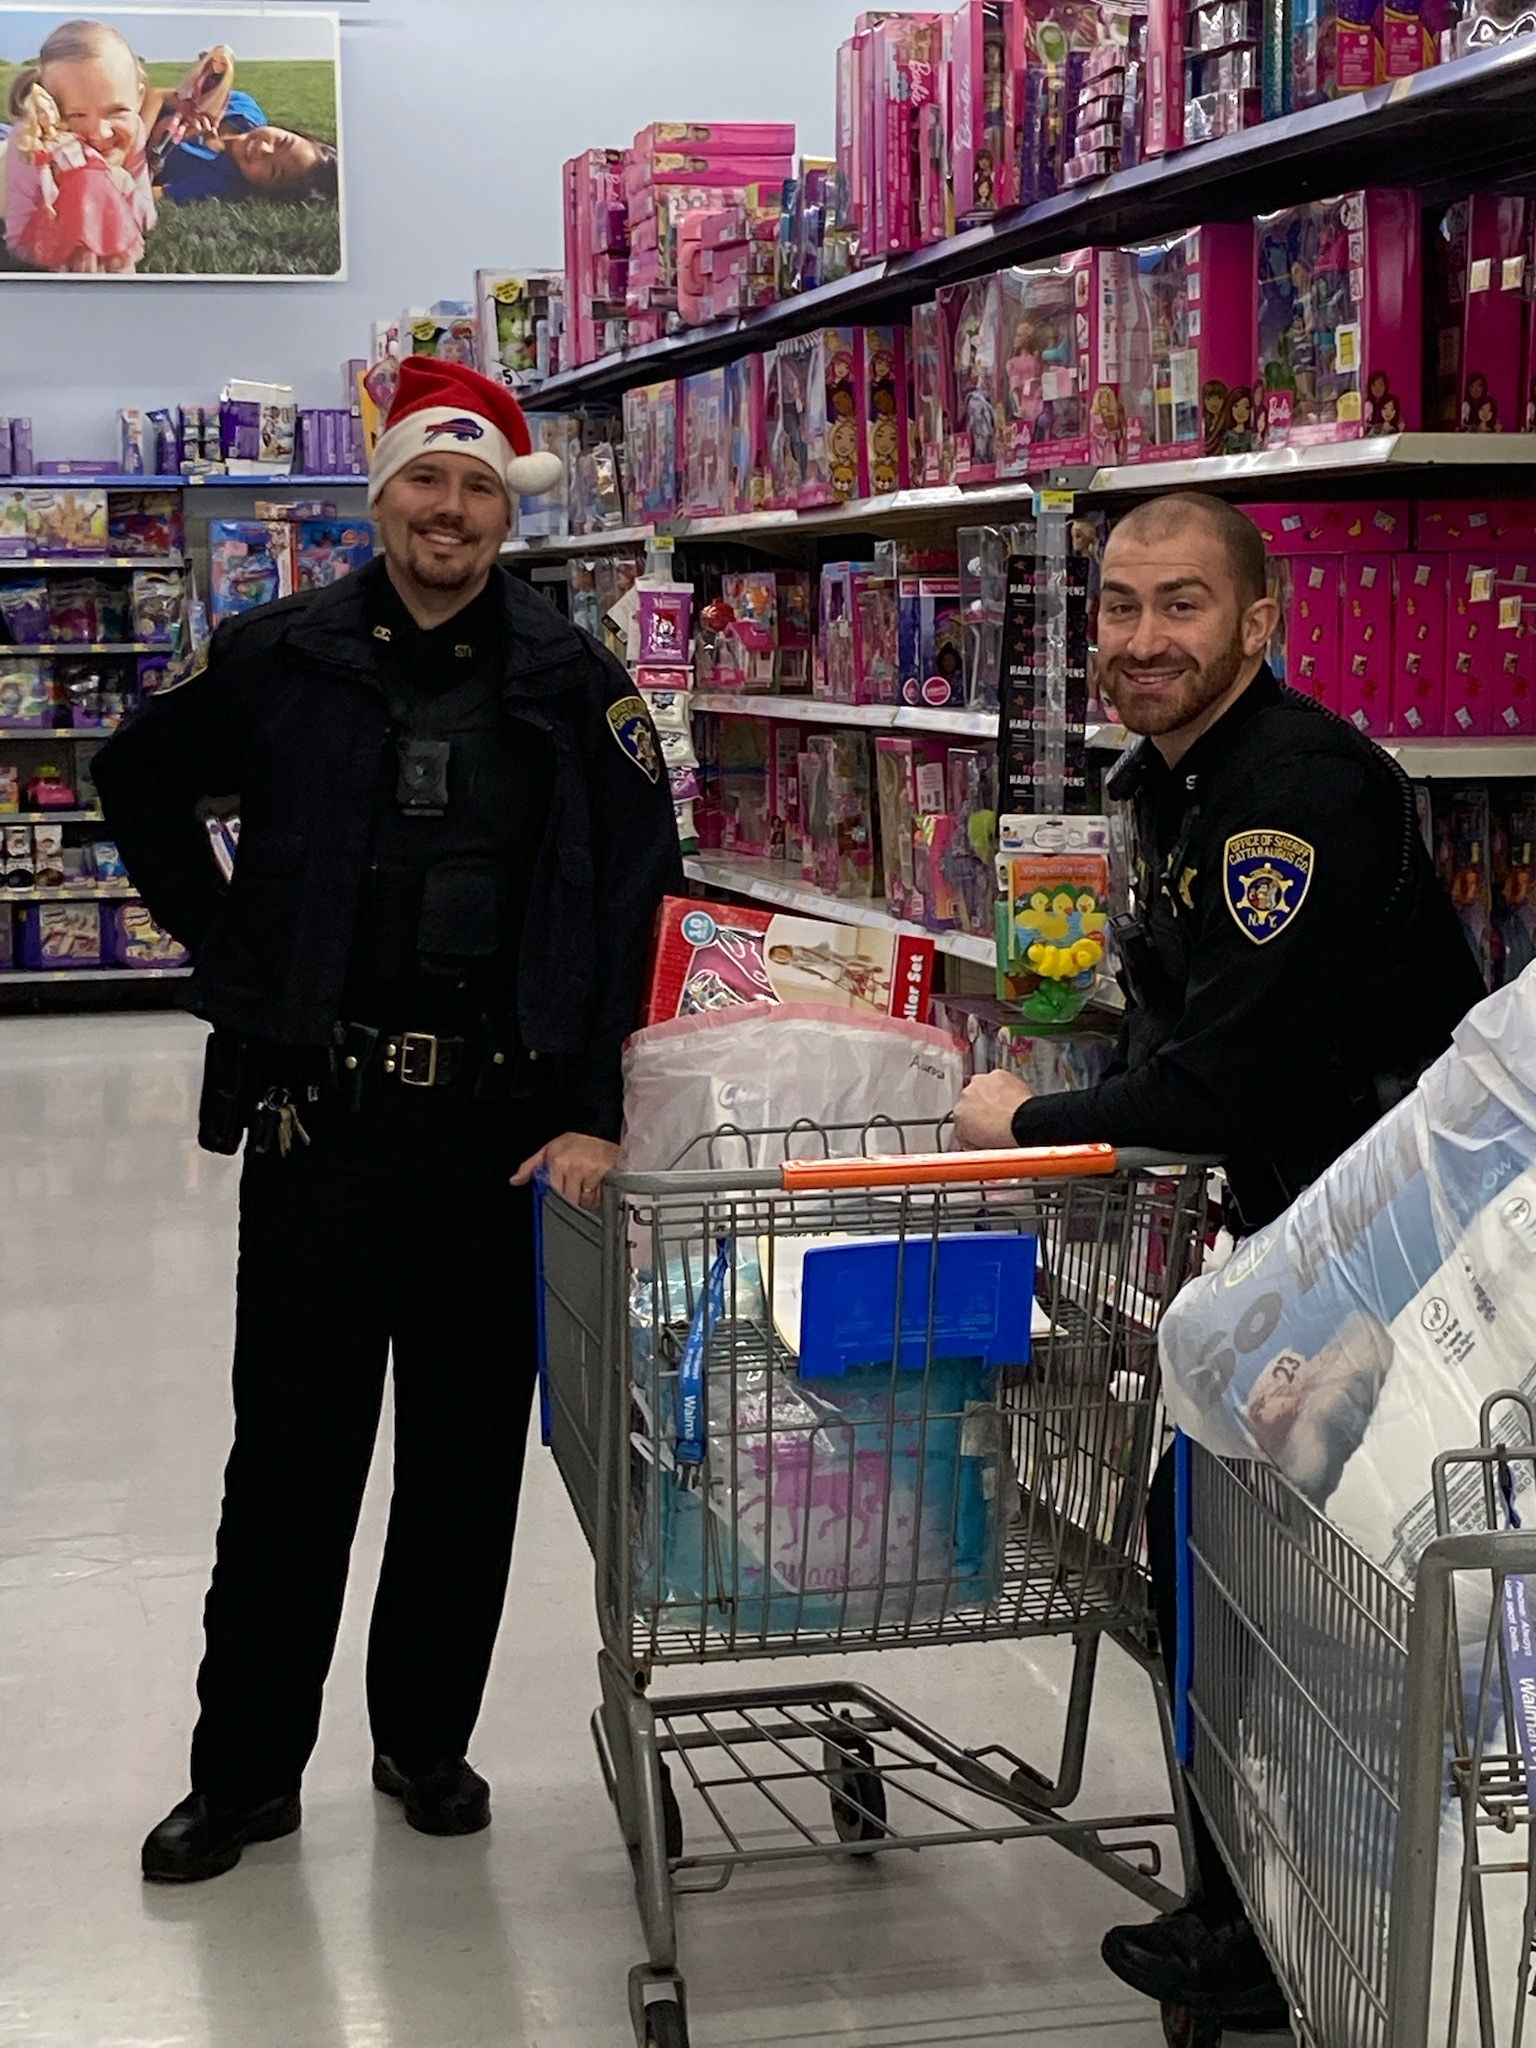 Deputy Steven Dombek and Deputy Kale Luce filling their shopping carts for Santa Sheriff families.